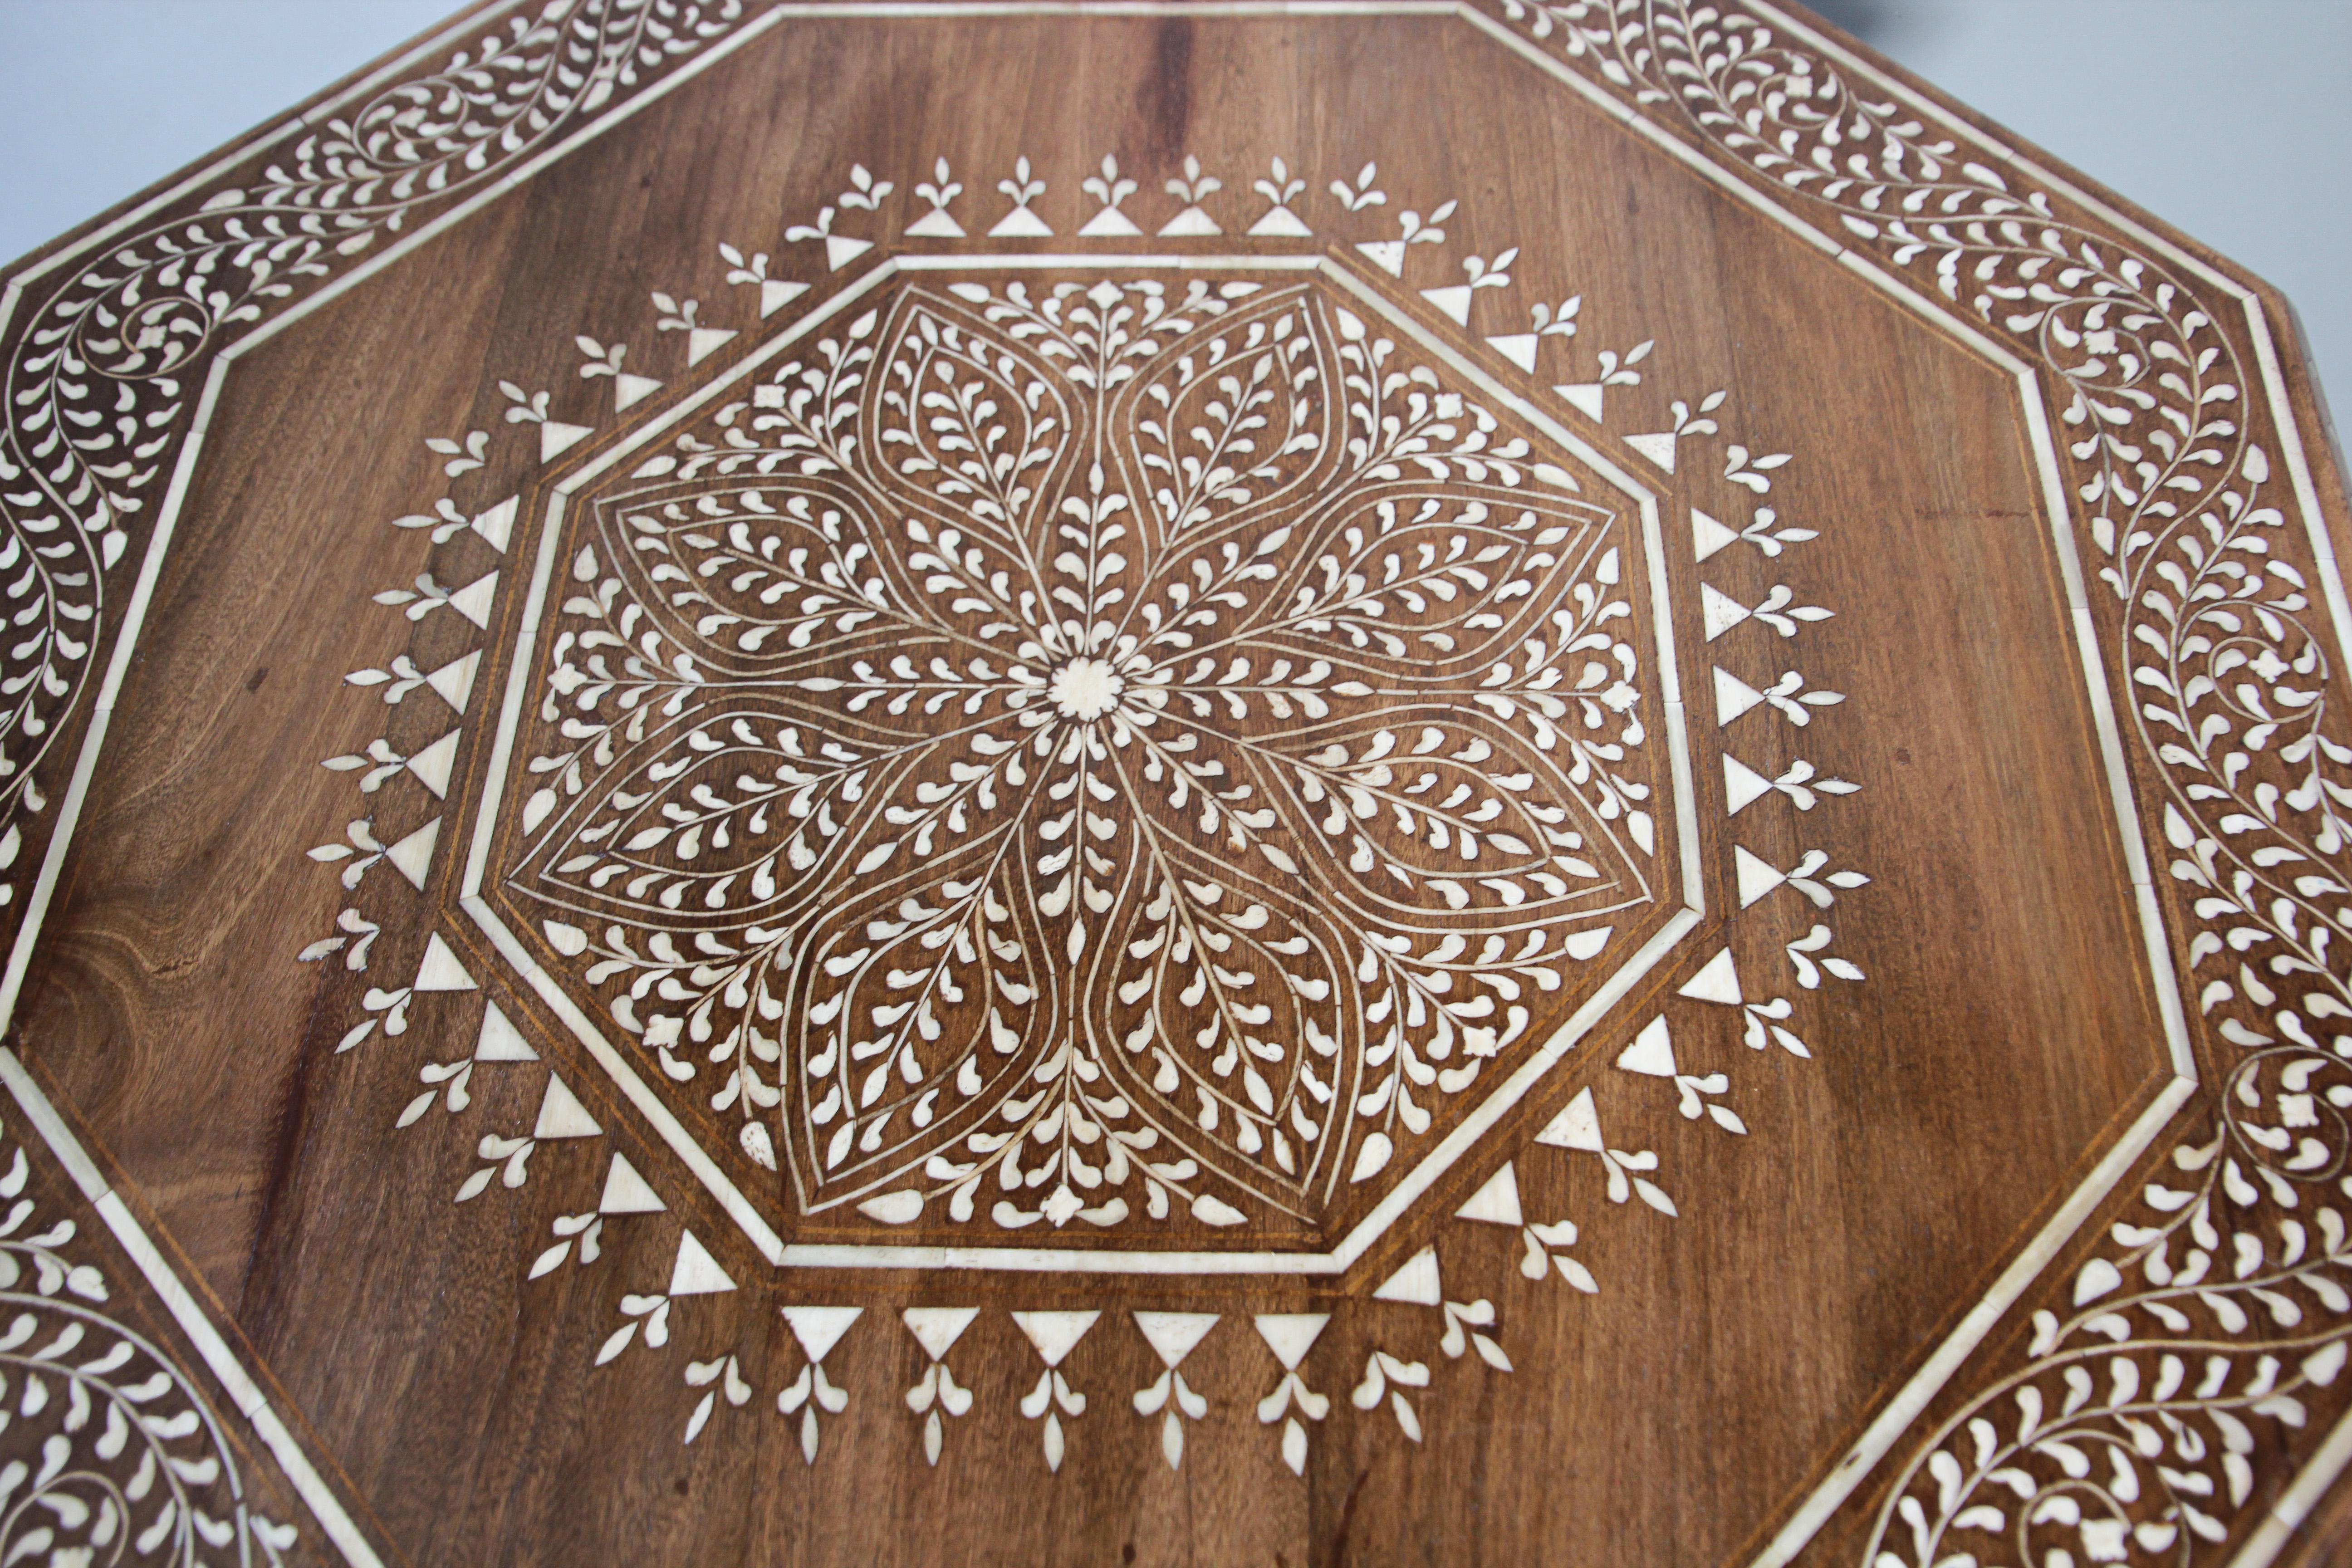 Wood Anglo-Indian Mughal Octagonal Moorish Table with Inlay